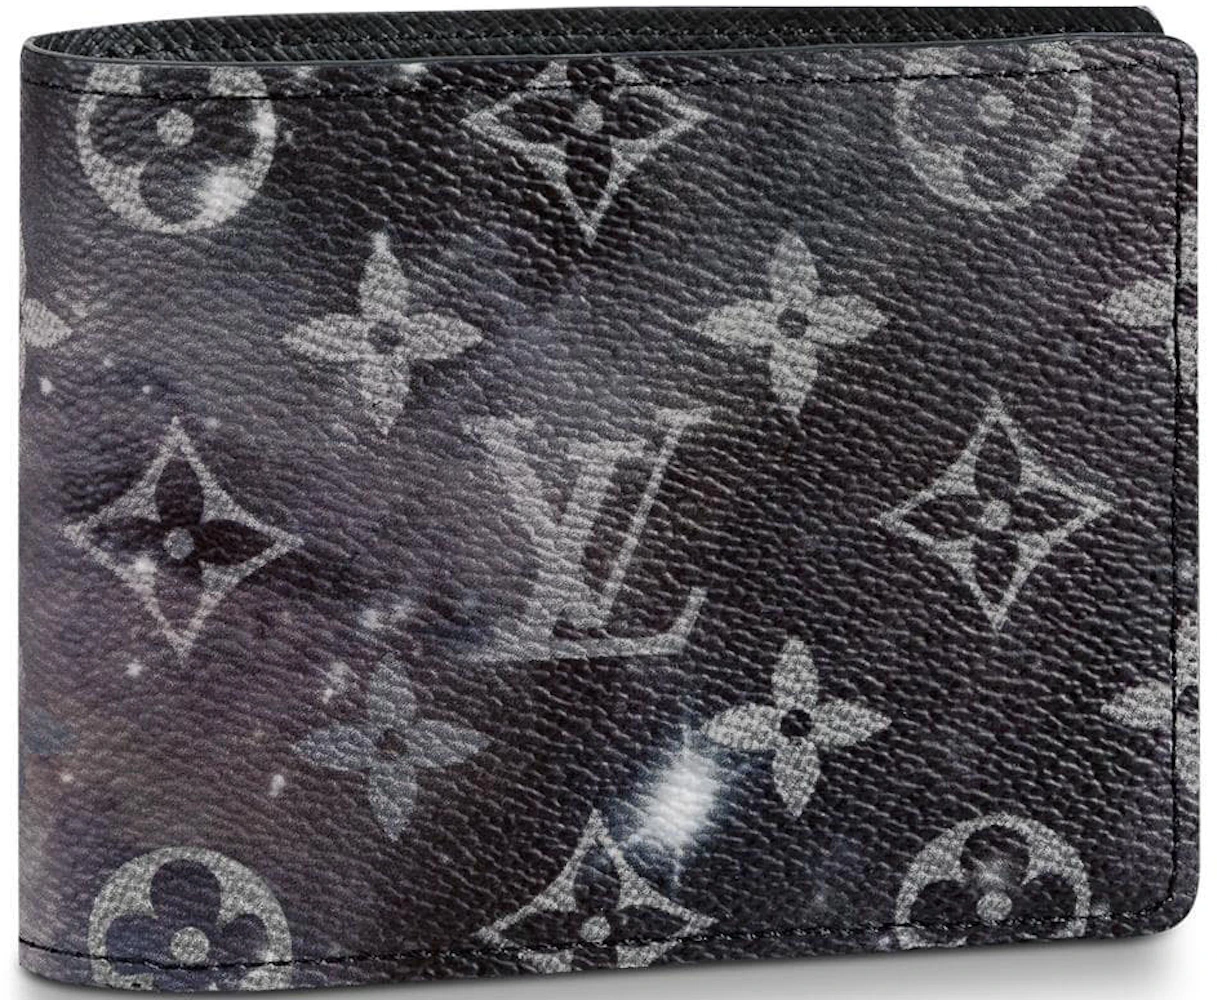 Louis Vuitton x NBA Multiple Wallet Monogram